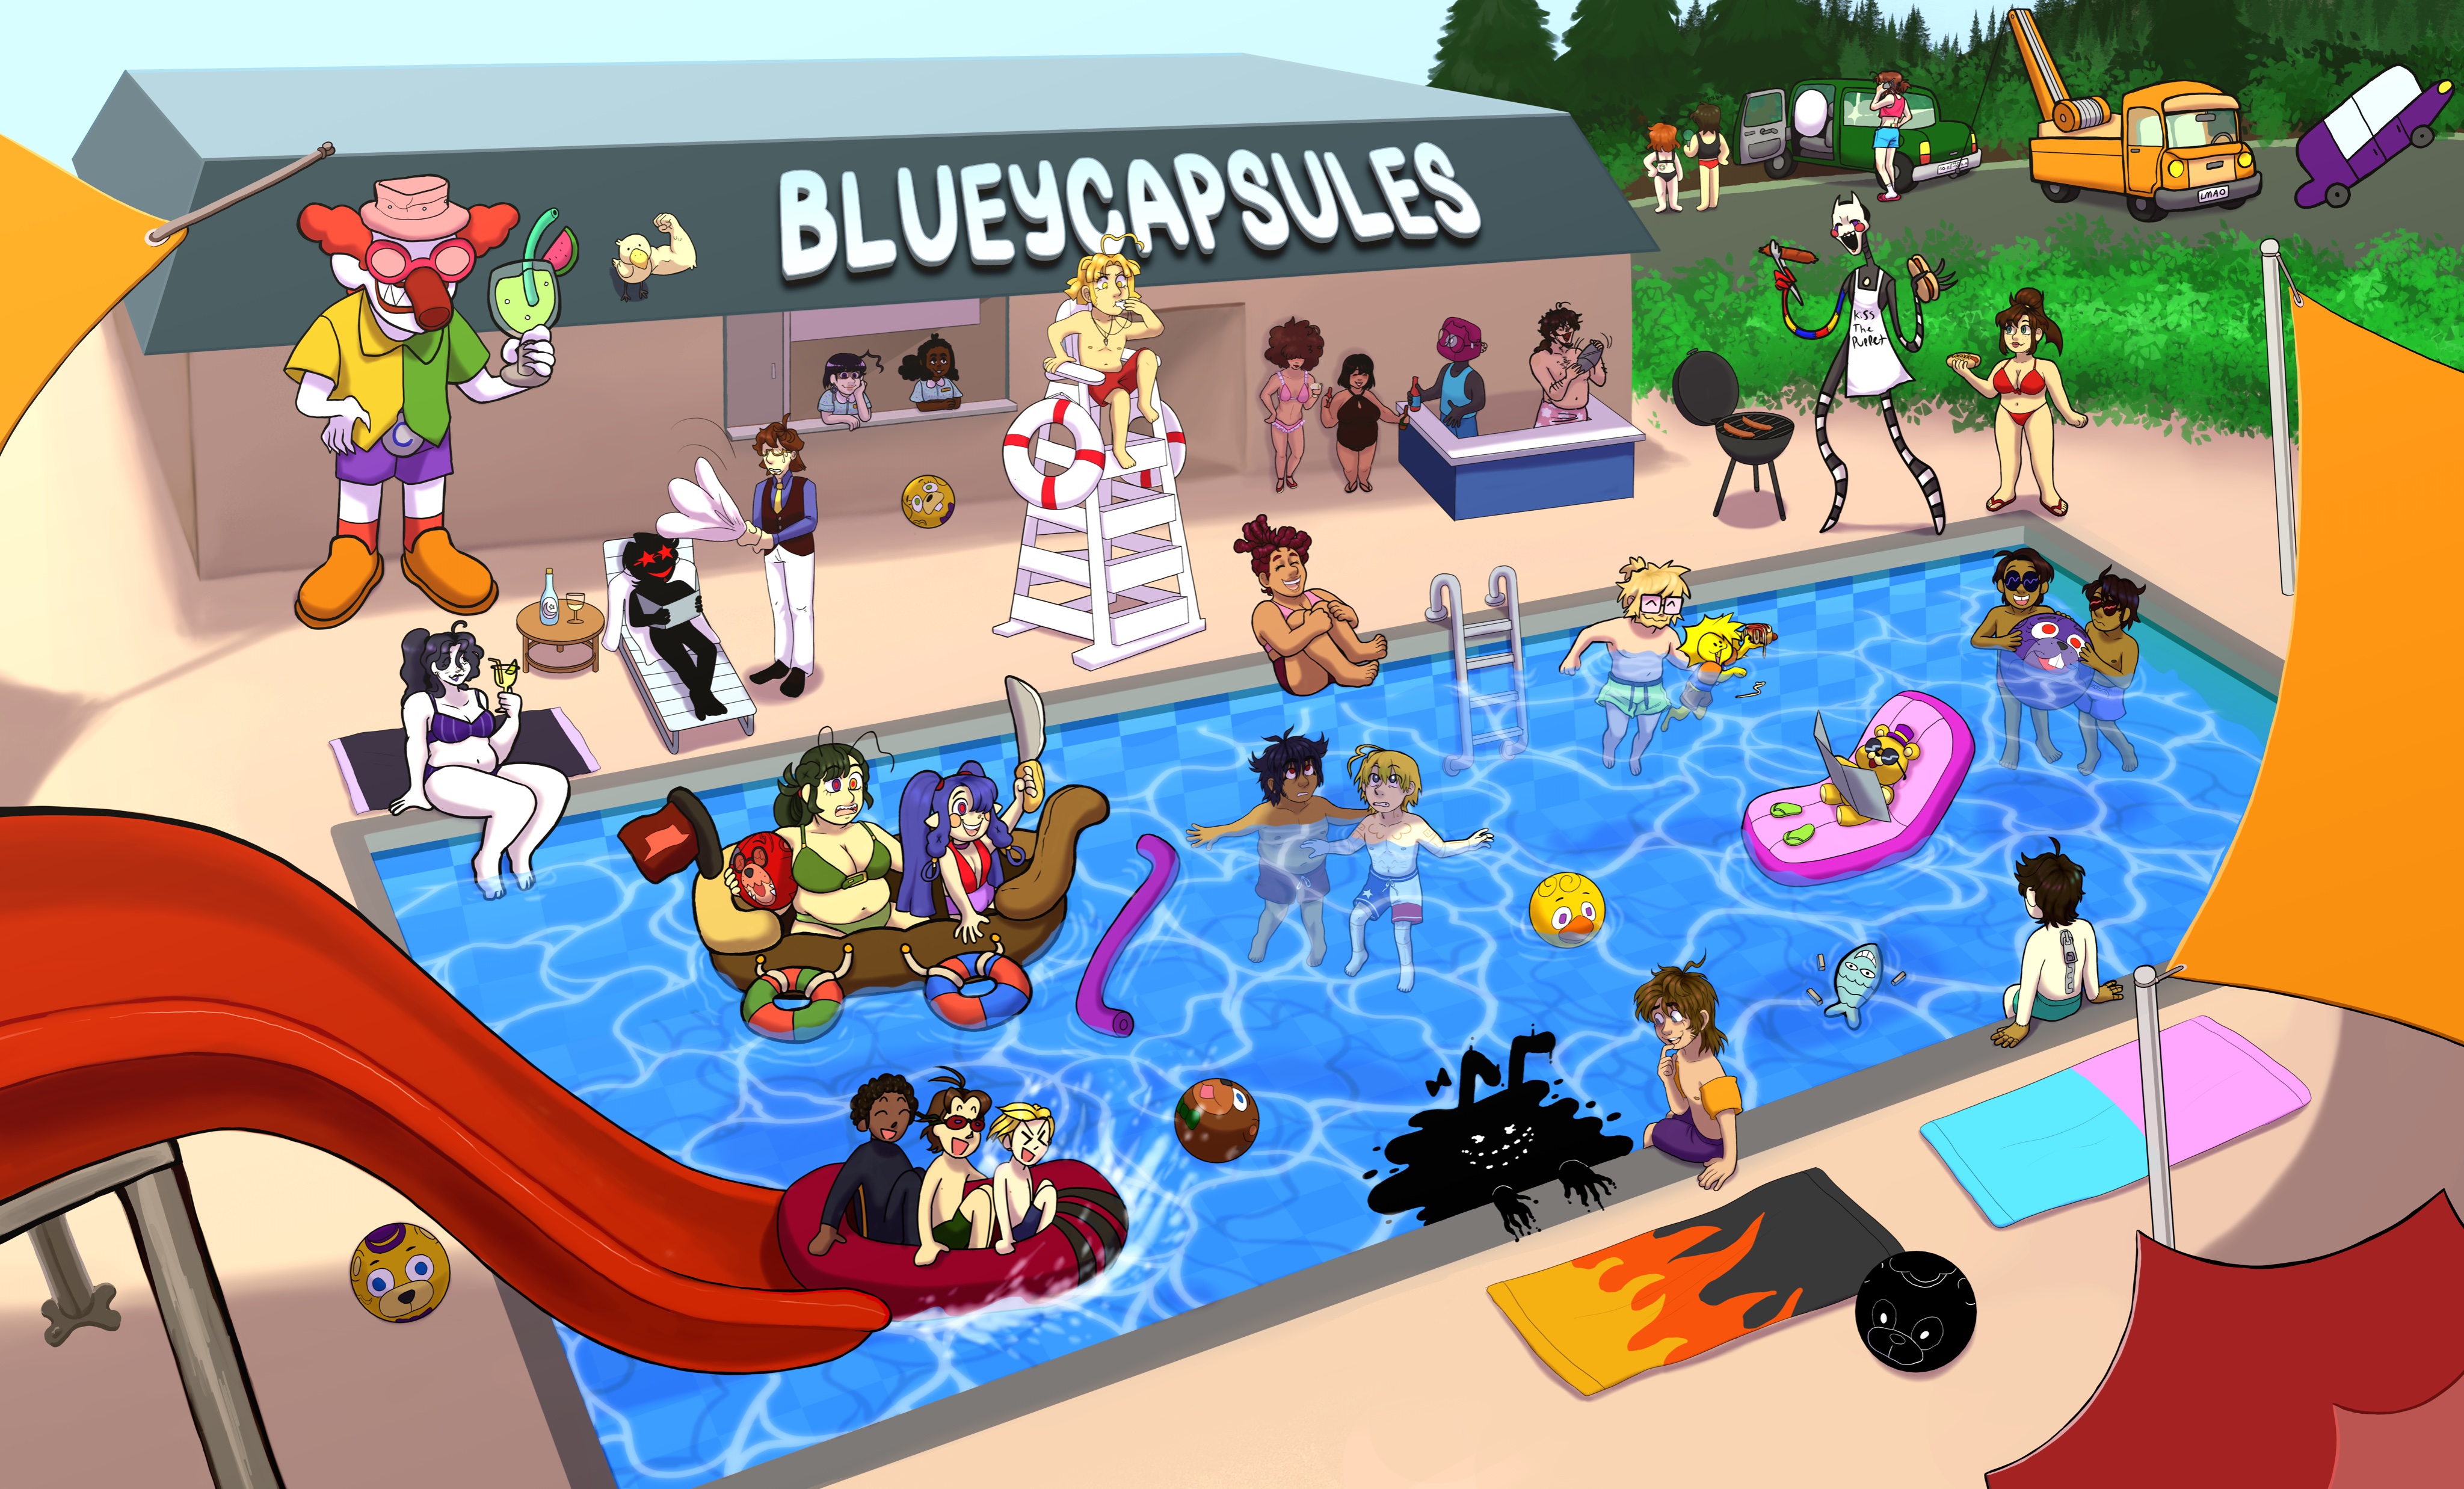 at pool #blueycapsules